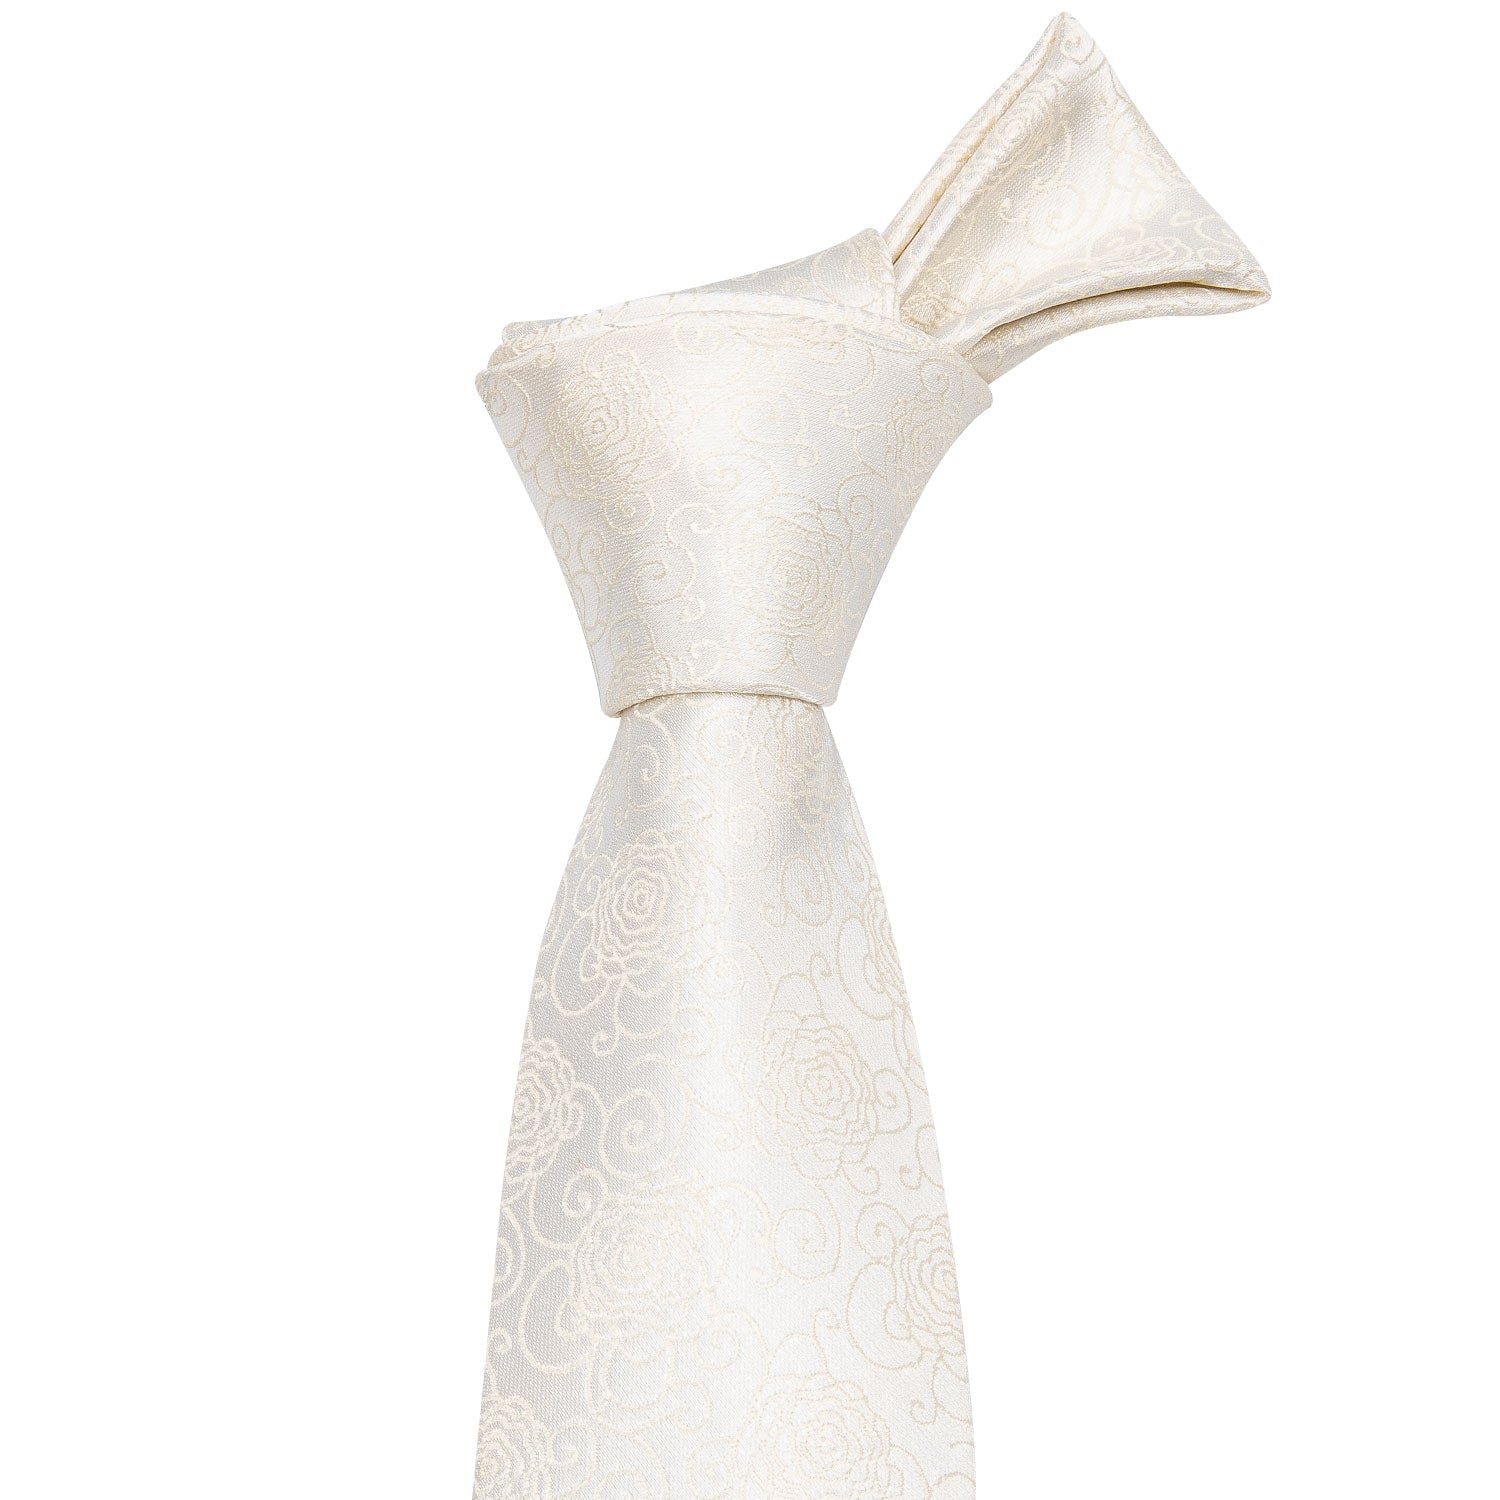 Barry.wang Champagne Tie Beige Floral Silk Tie Pocket Square Cufflinks Set